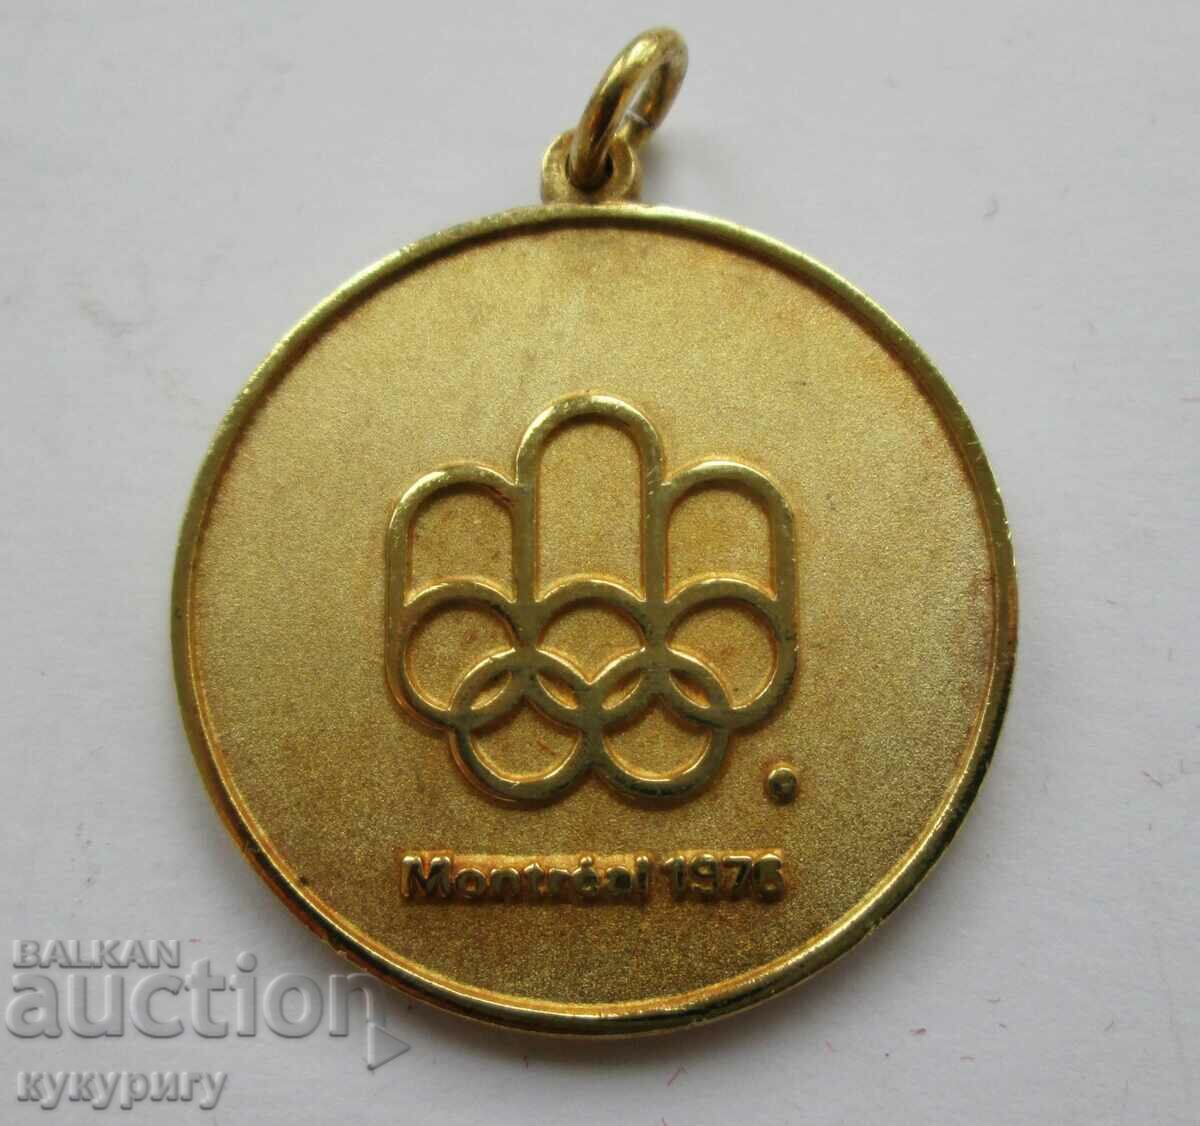 Vechi semn olimpic medalie Olimpiada Montreal 76